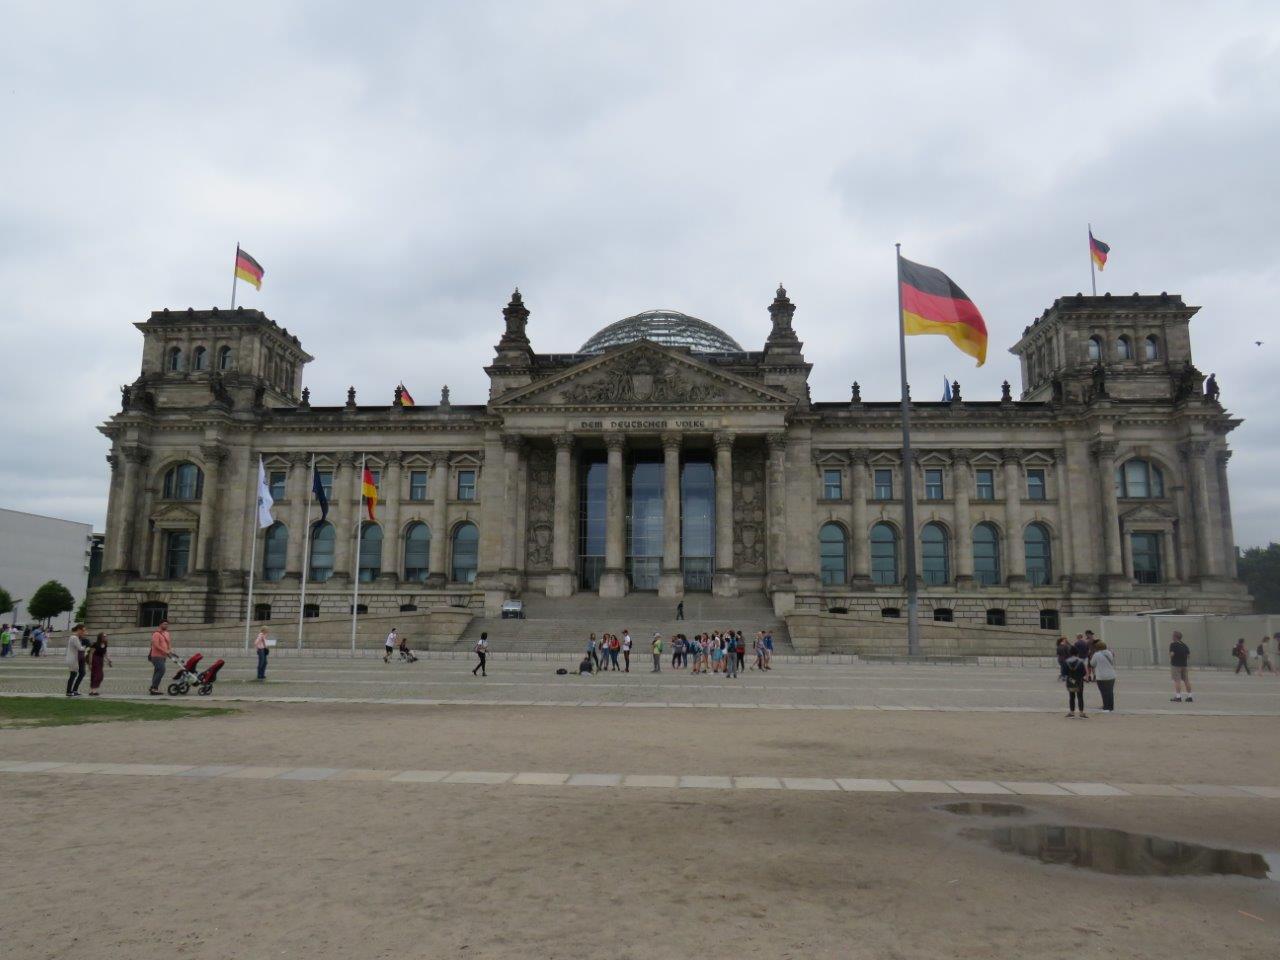  06/07/2018 Bundestag